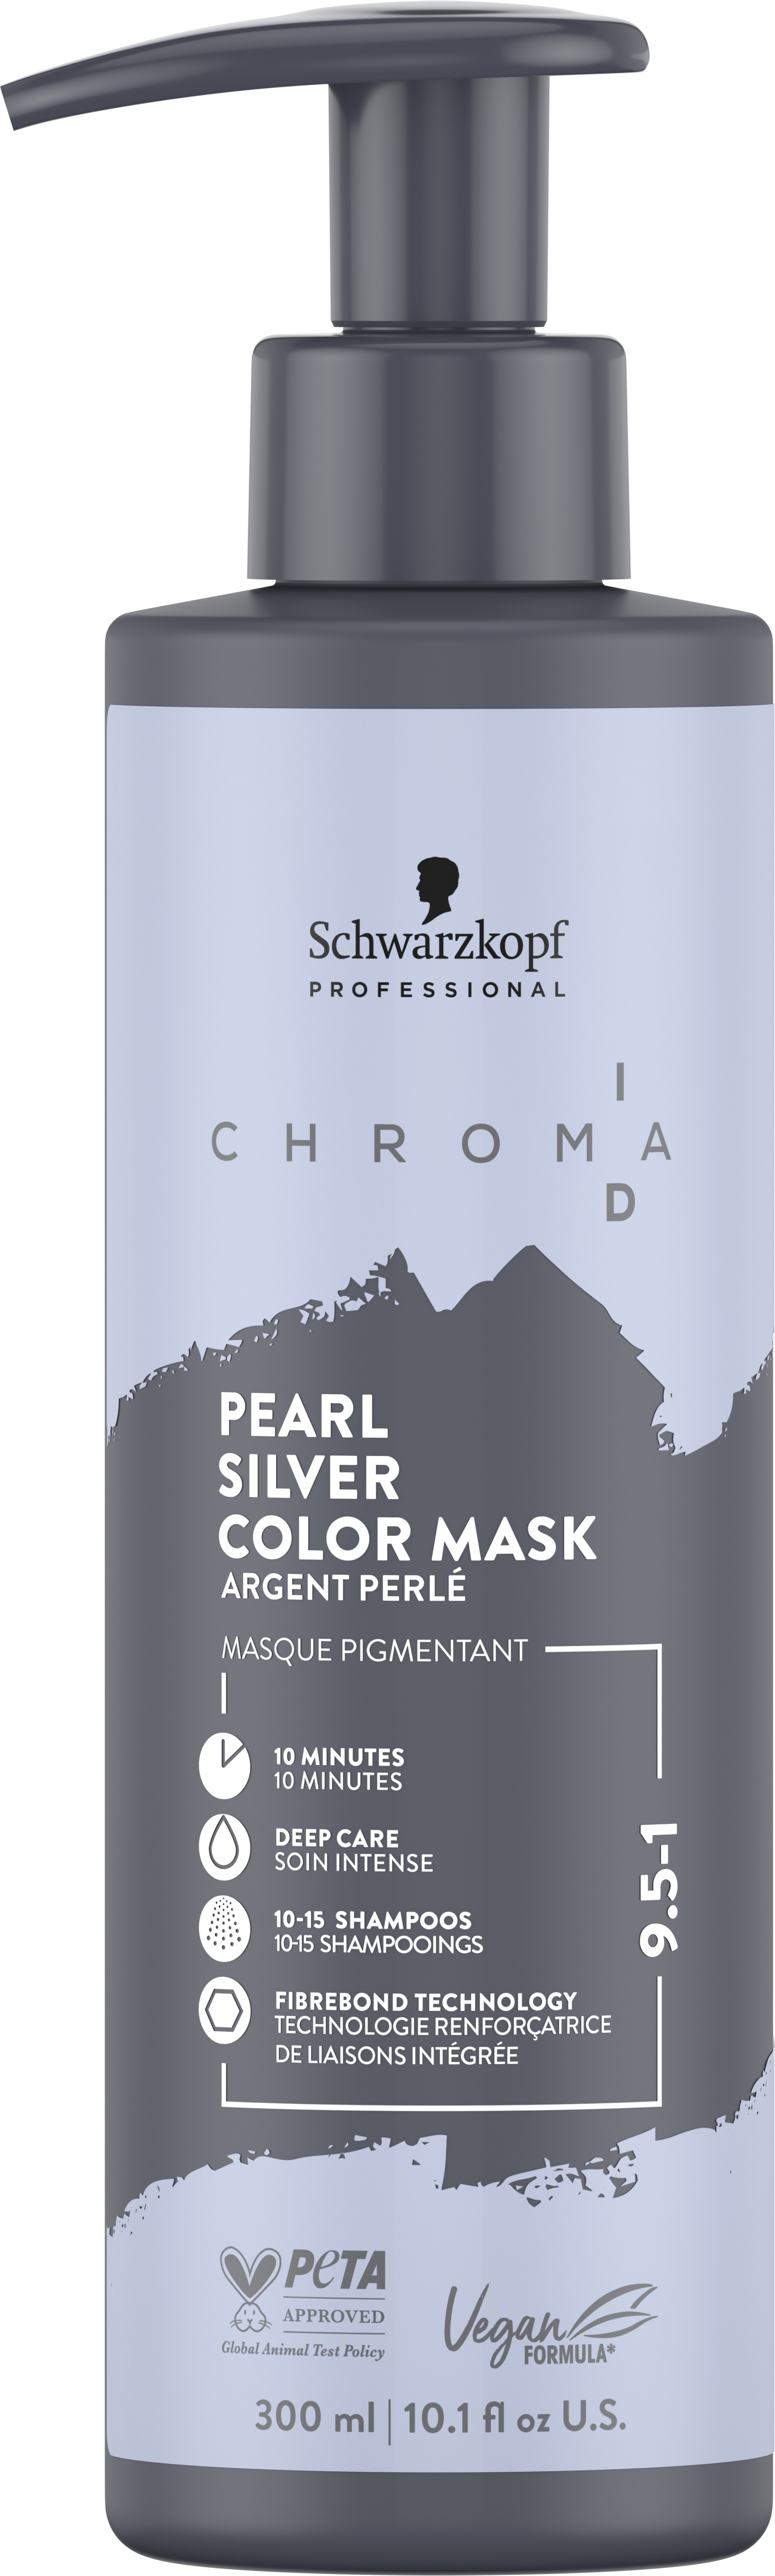 Produktbild von Chroma ID - Bonding Color Mask 9,5-1 Pearl Silver